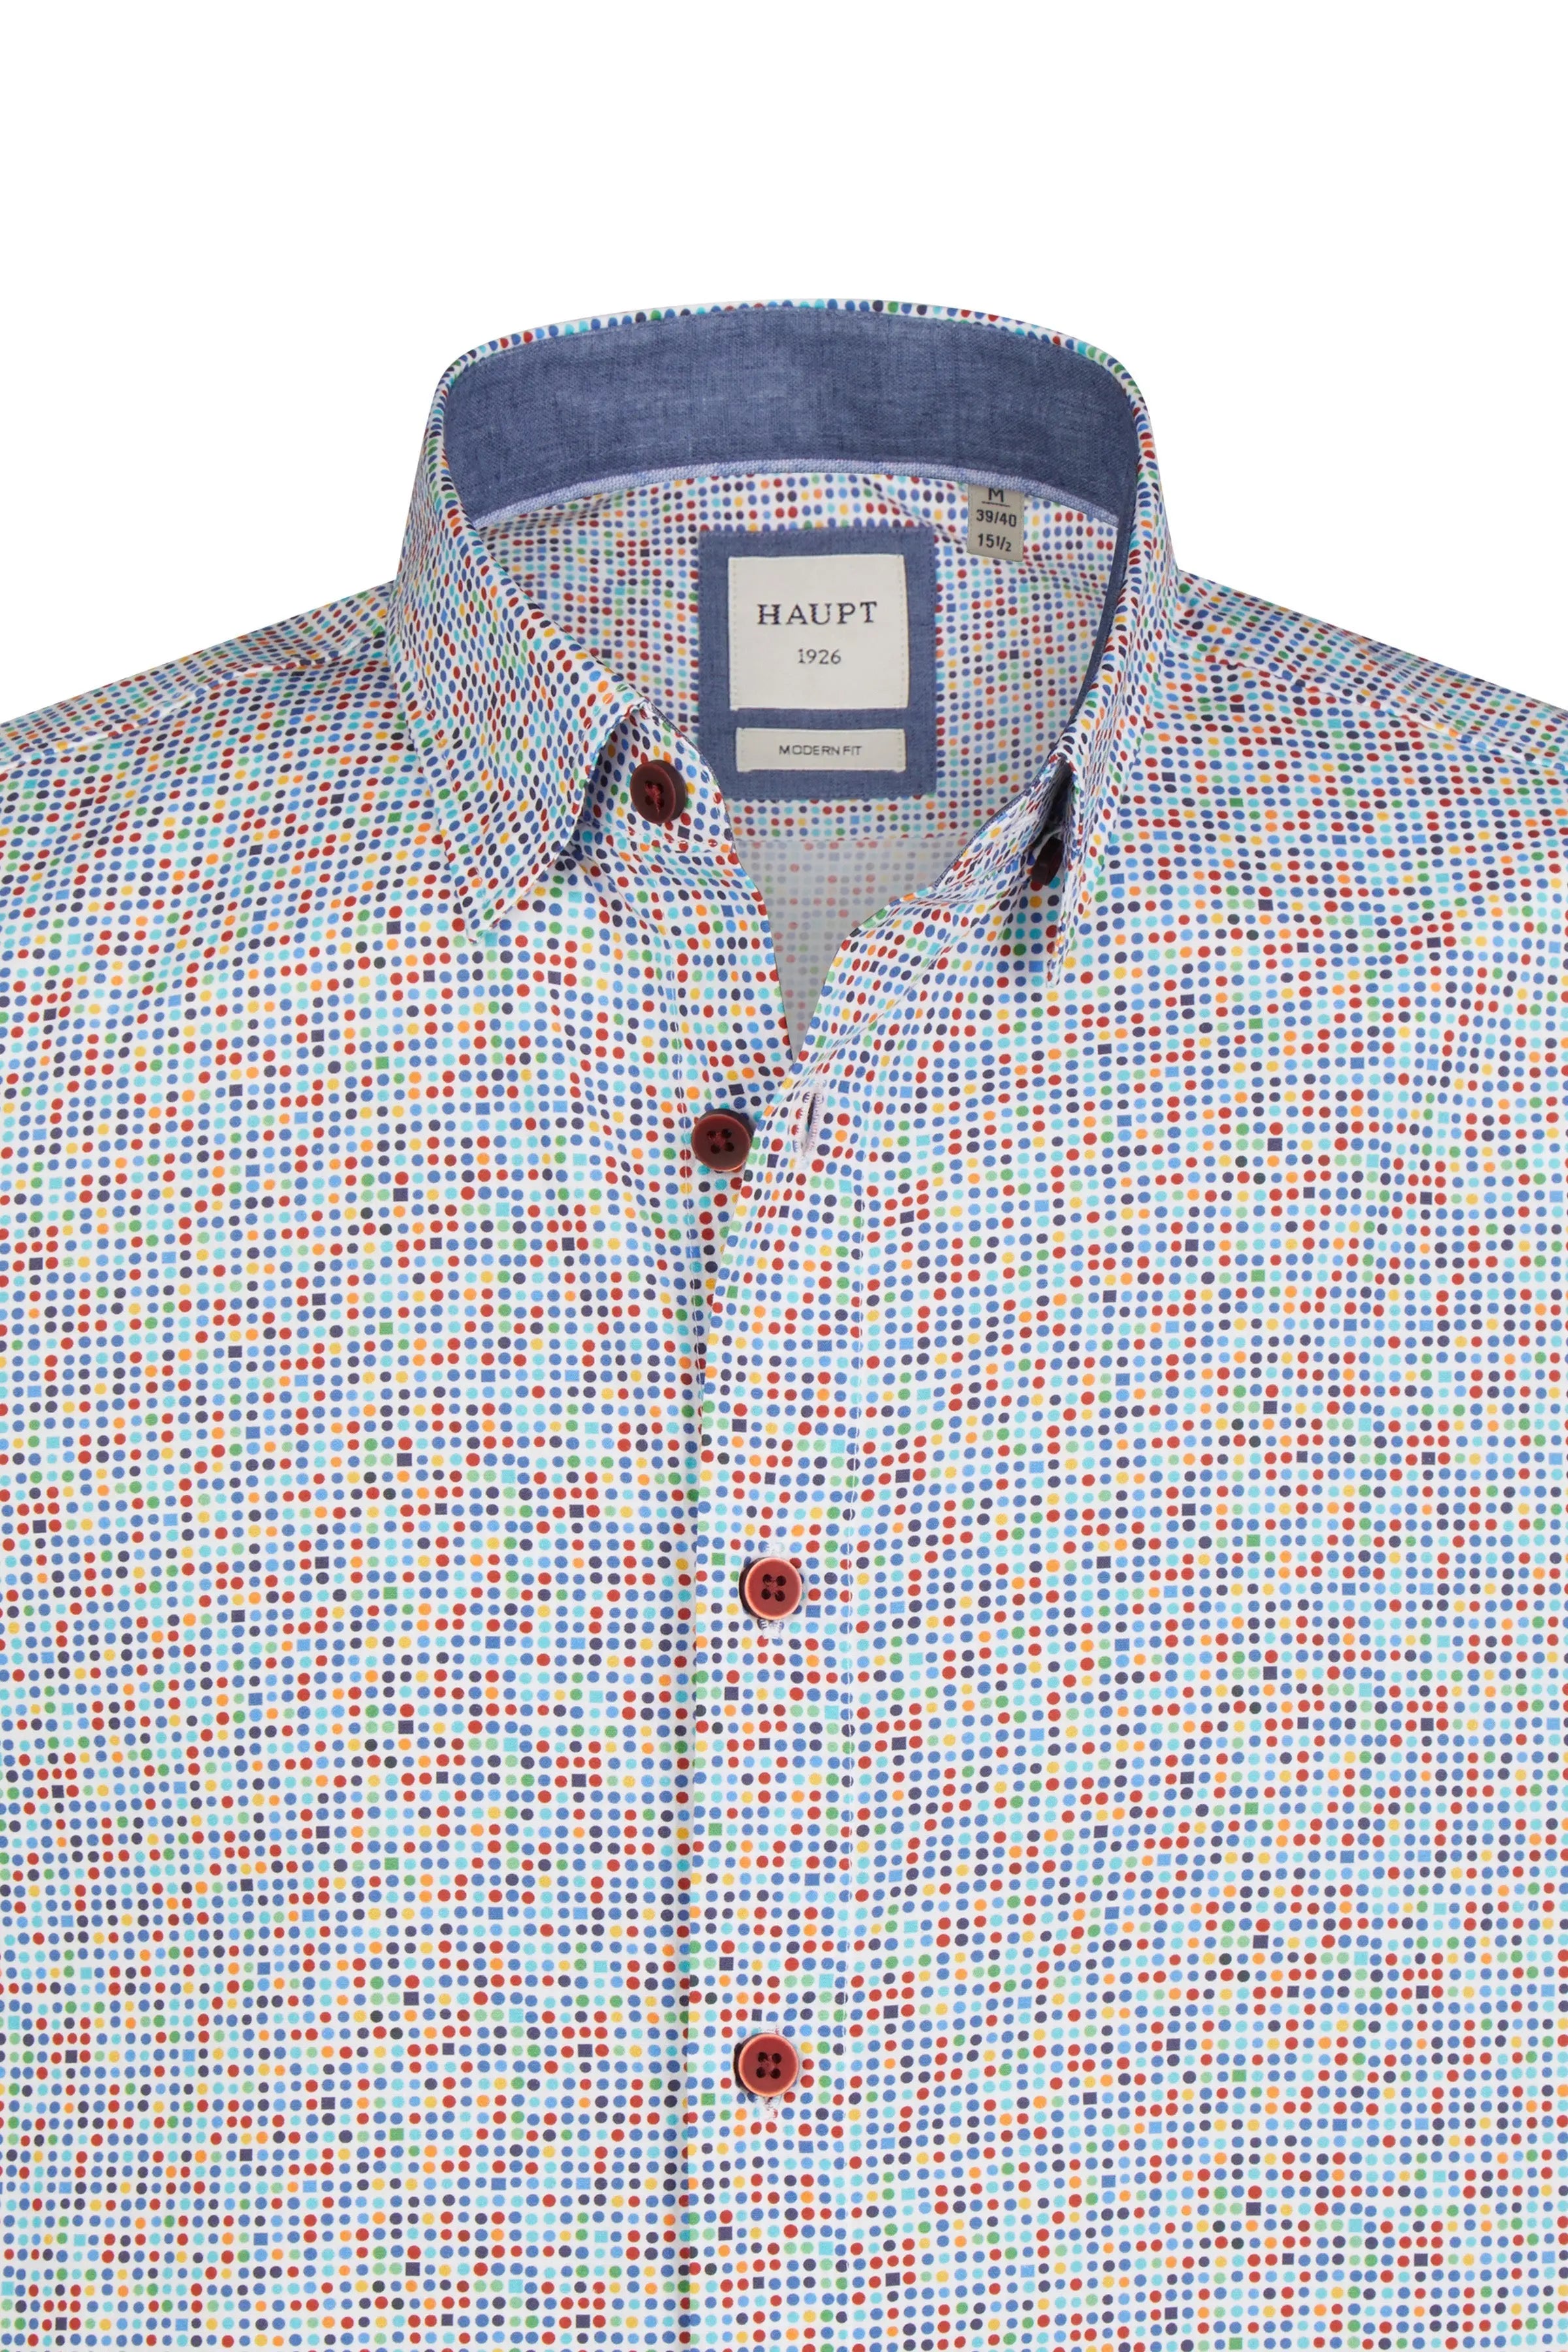 Baumwoll-Herrenhemd multicolor